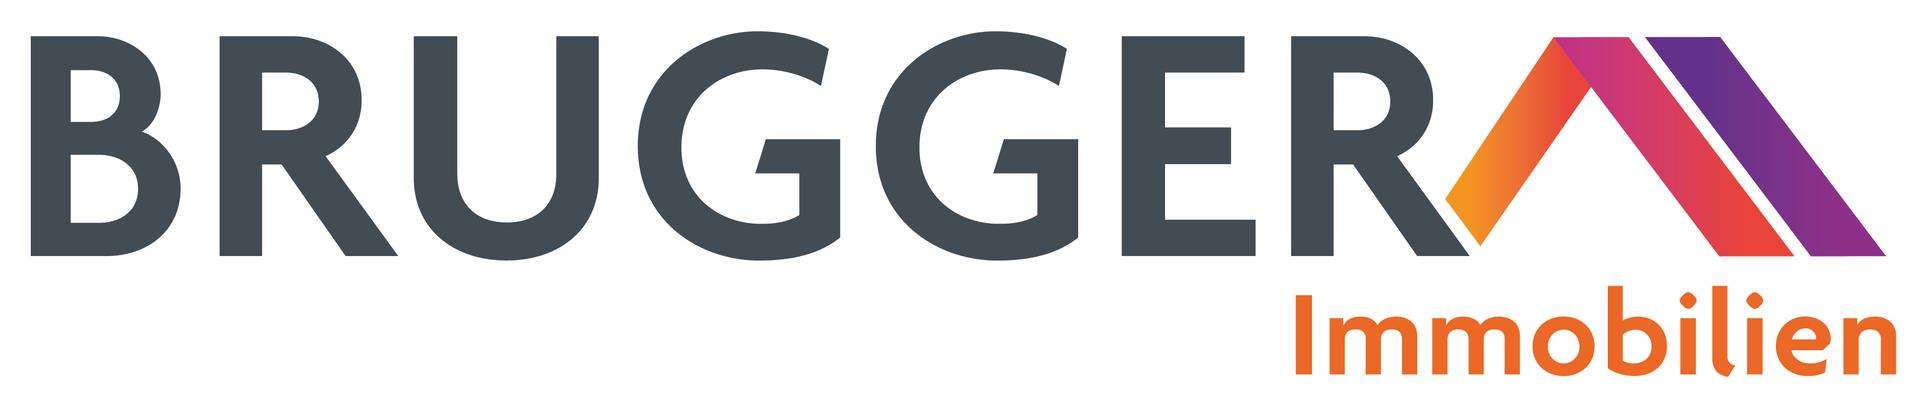 Makler Brugger Wohnbau GmbH logo